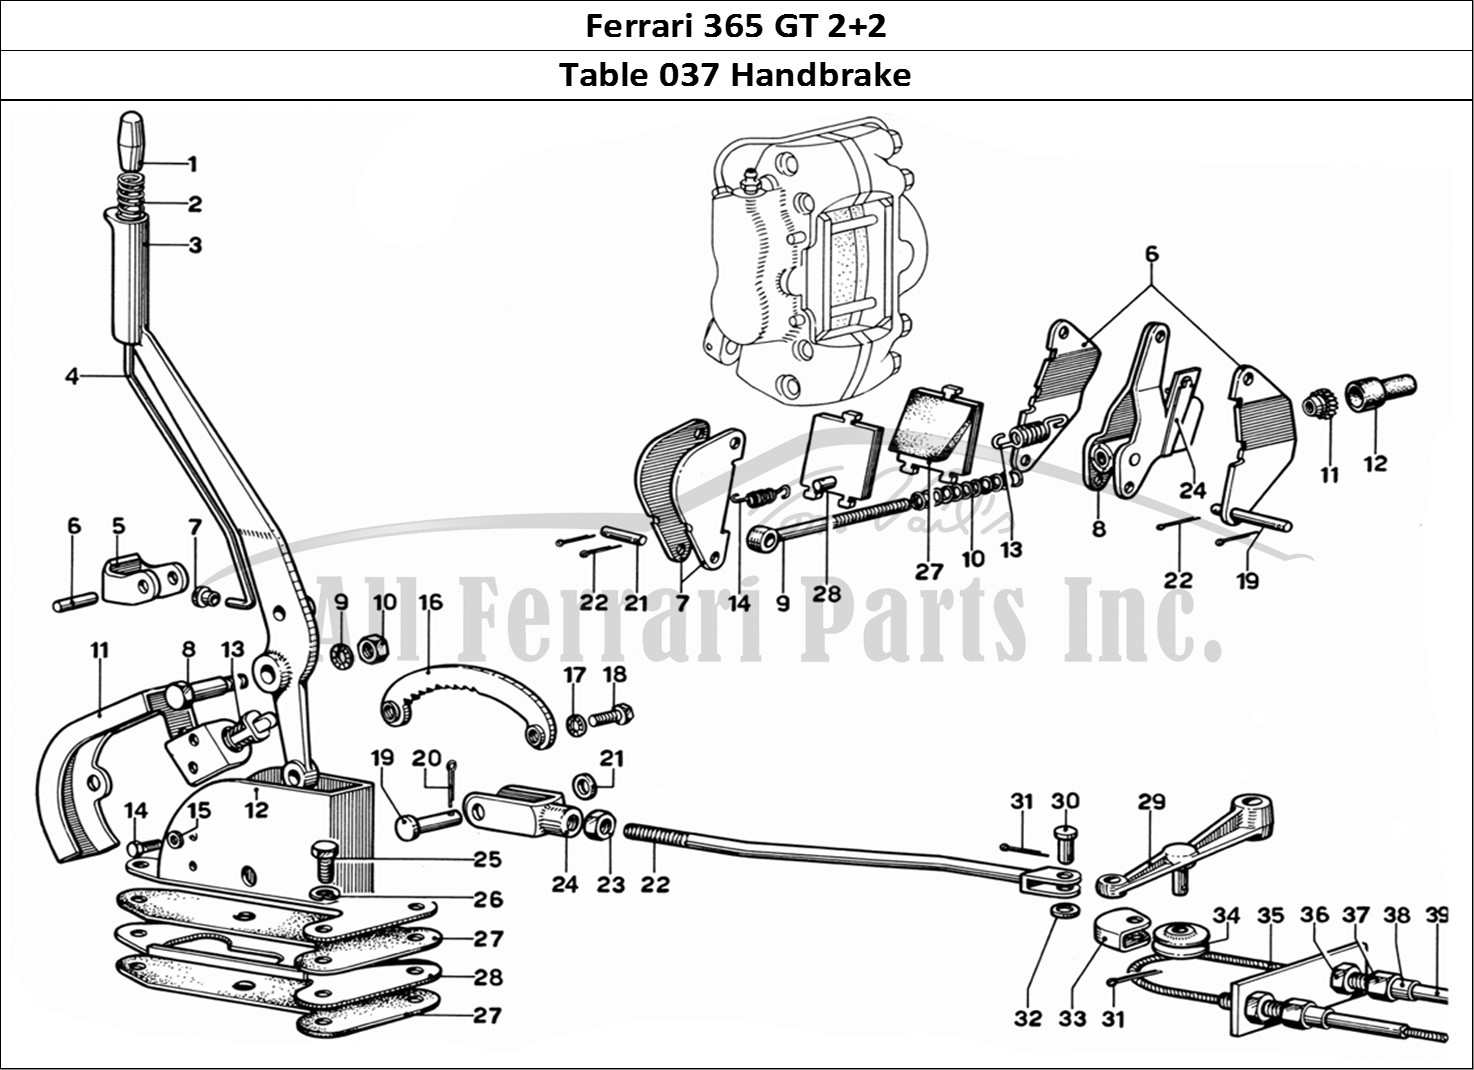 Ferrari Parts Ferrari 365 GT 2+2 (Mechanical) Page 037 Hand-Brake Control